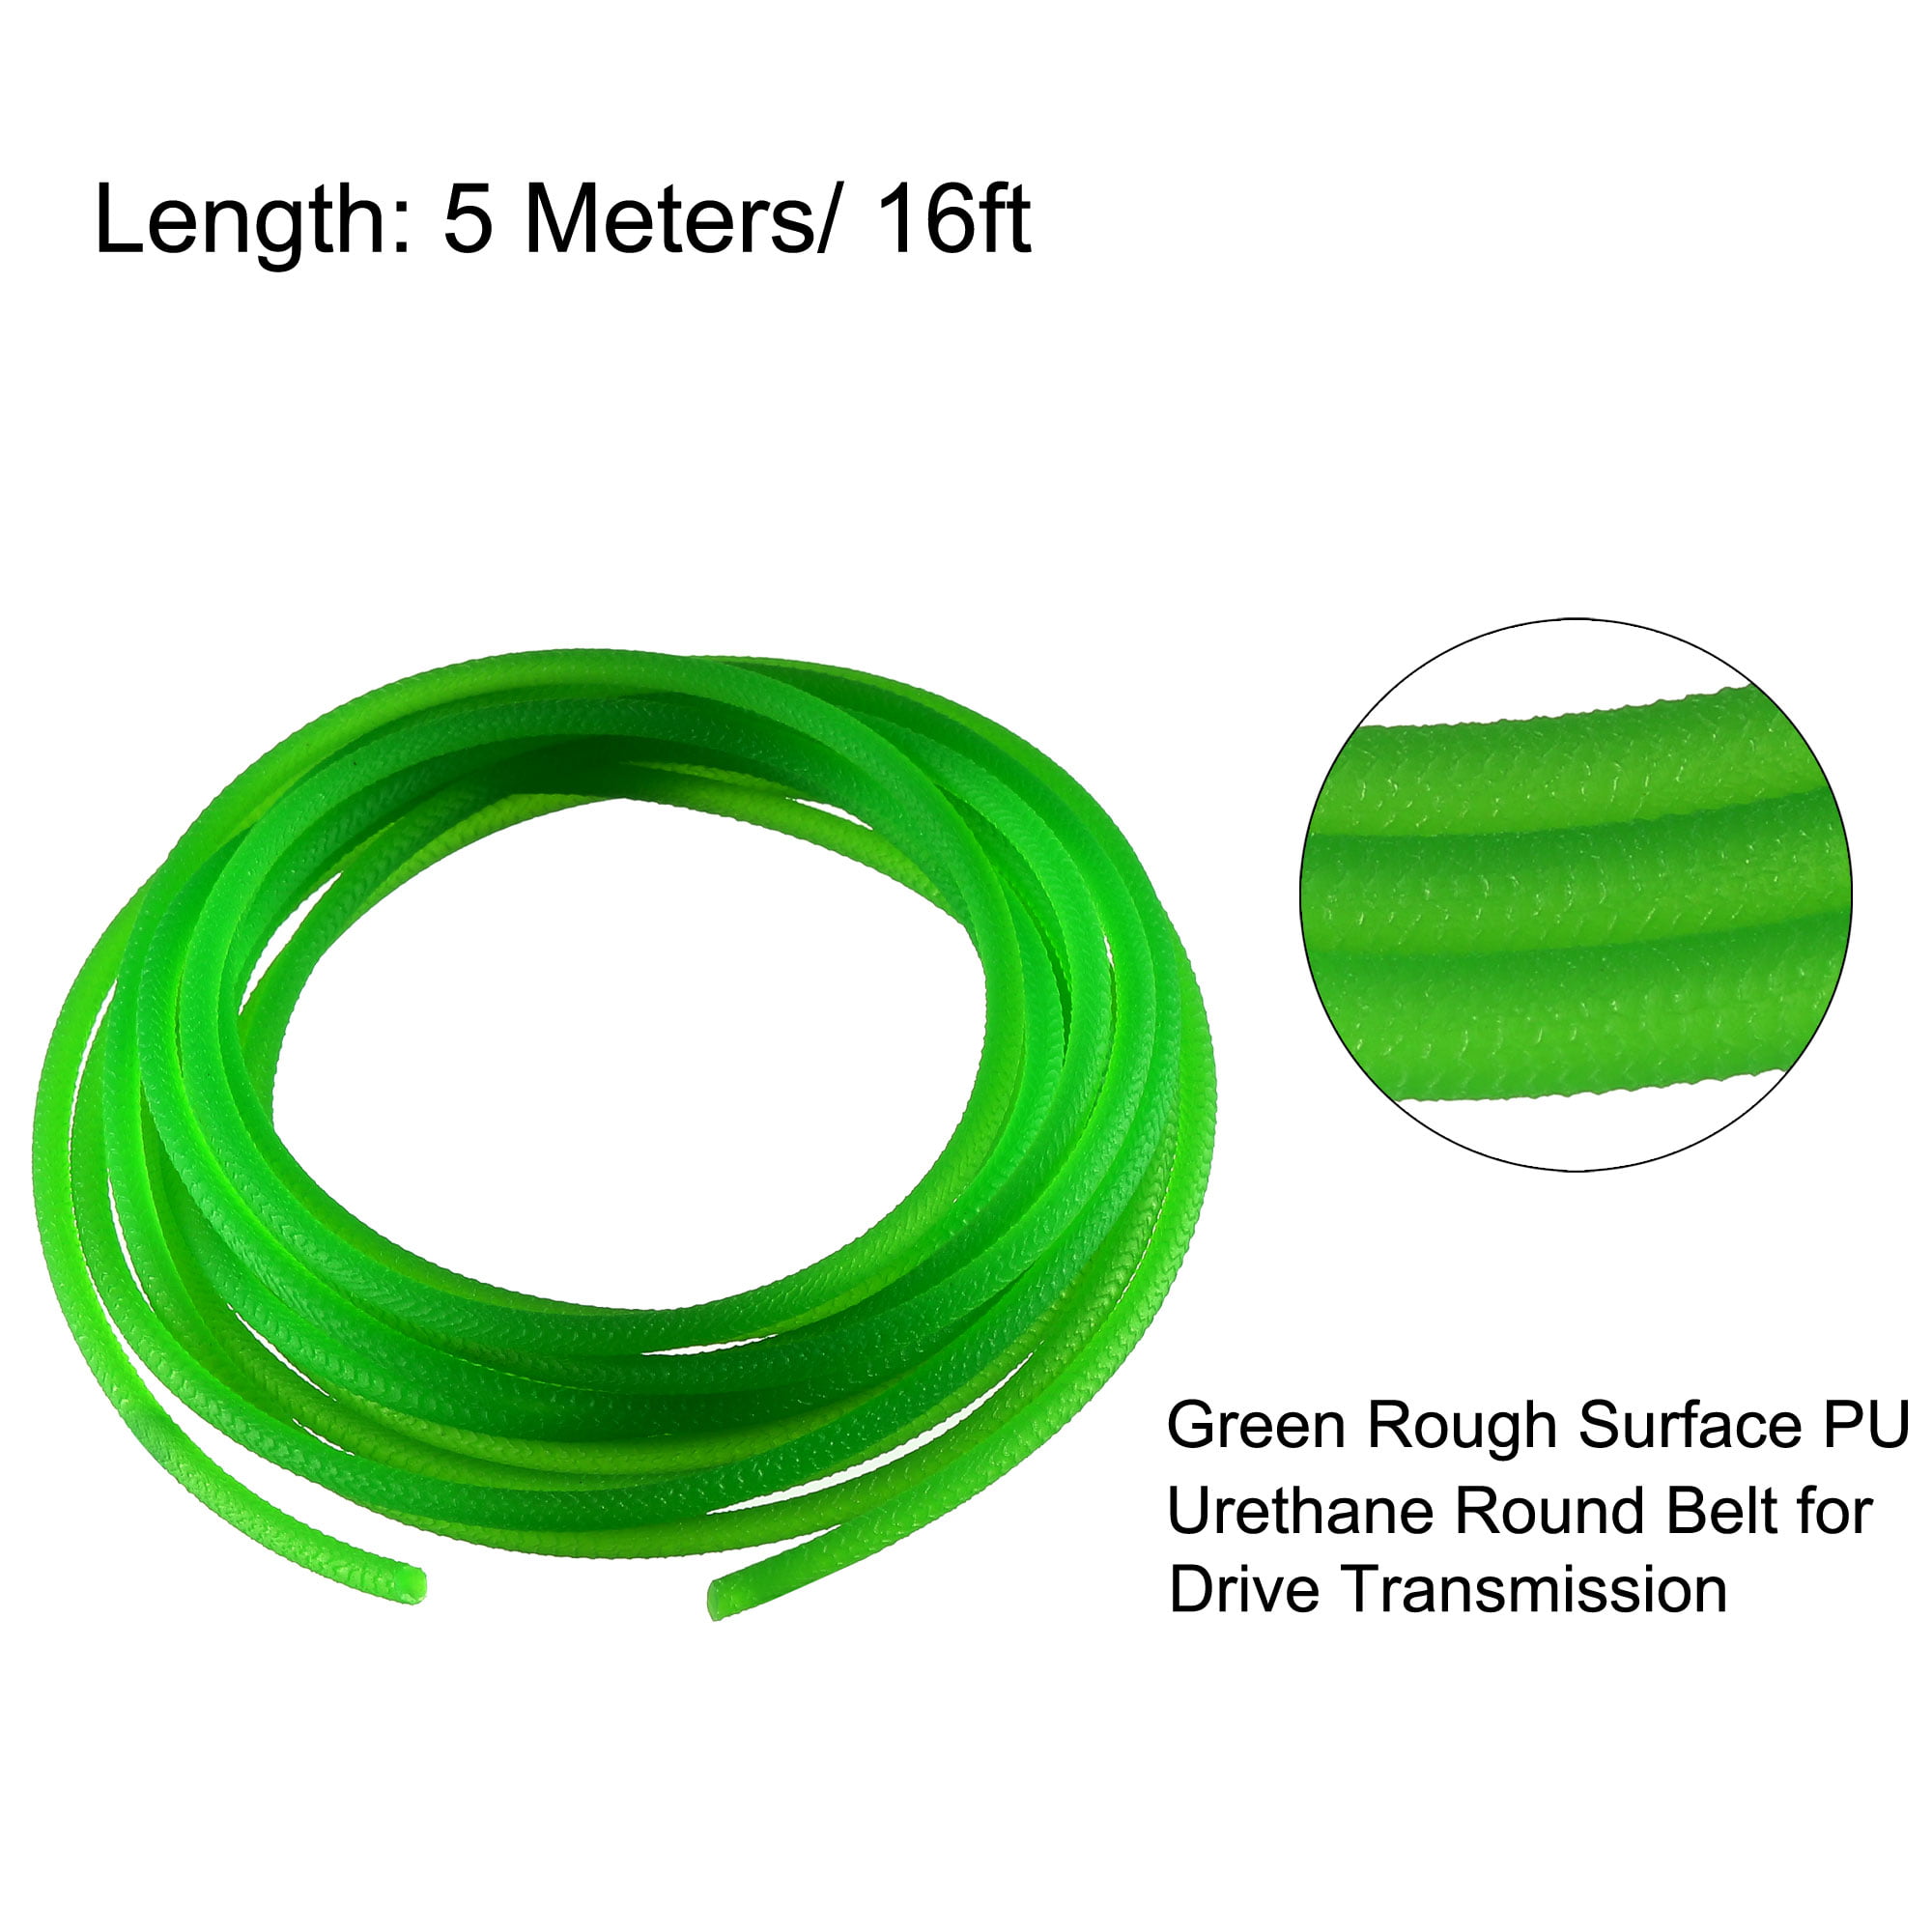 uxcell 3ft 6mm PU Transmission Round Belt High-Performance Urethane Belting Green for Conveyor Bonding Machine Dryer 